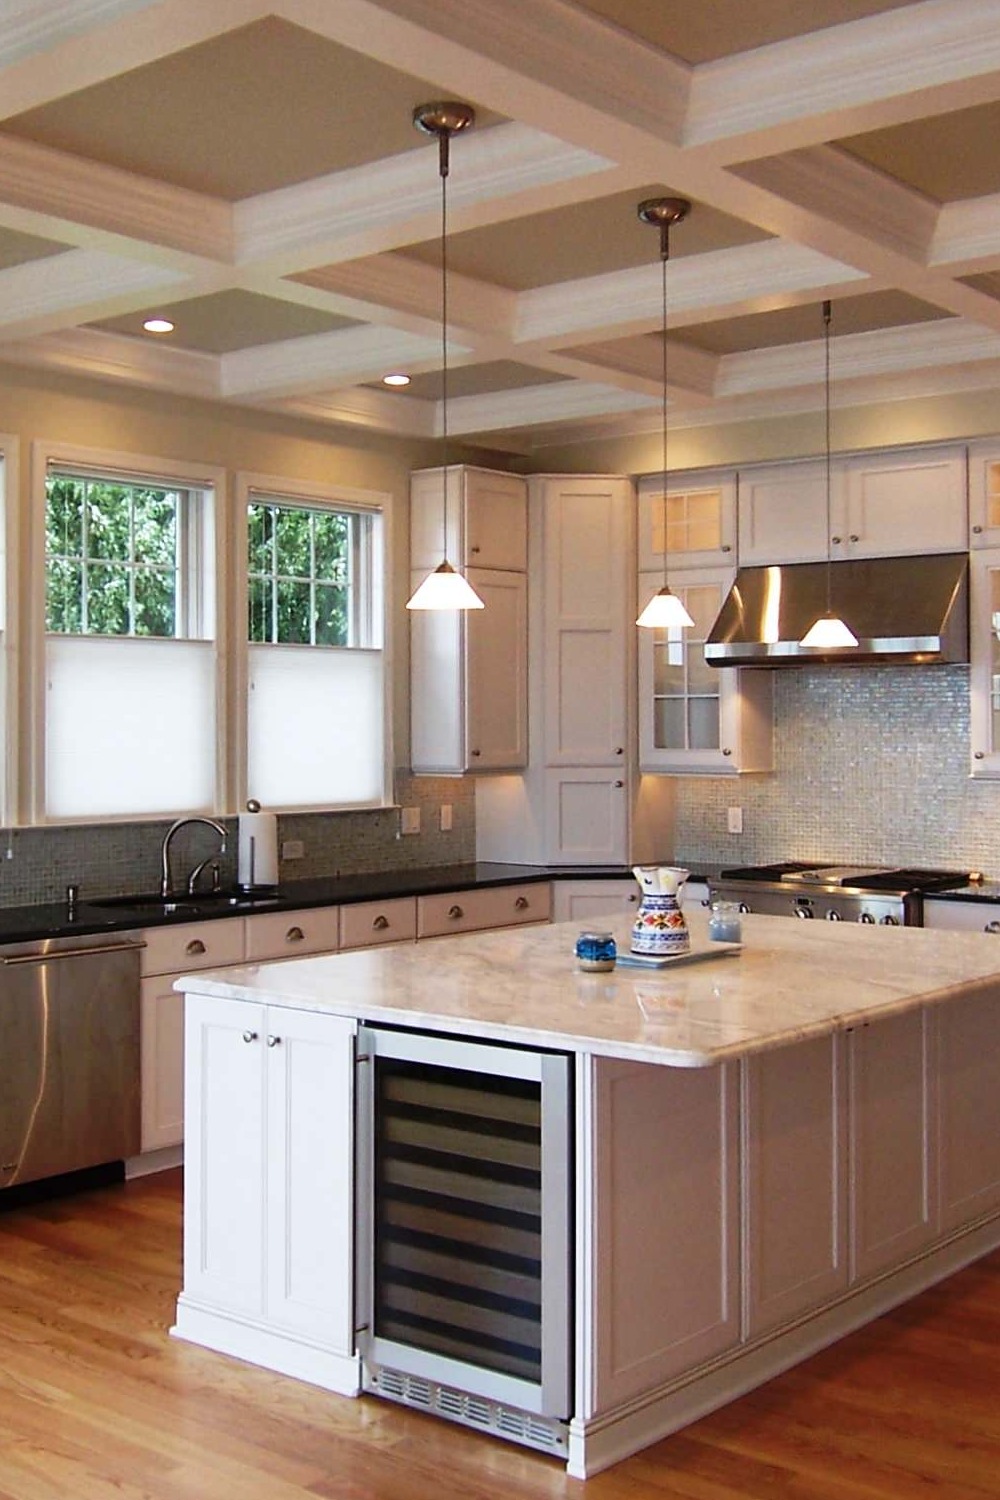 Coffered Design Mosaic Tiles Marble Countertops Pendant Lights Hardwood Floors Features Walls Room